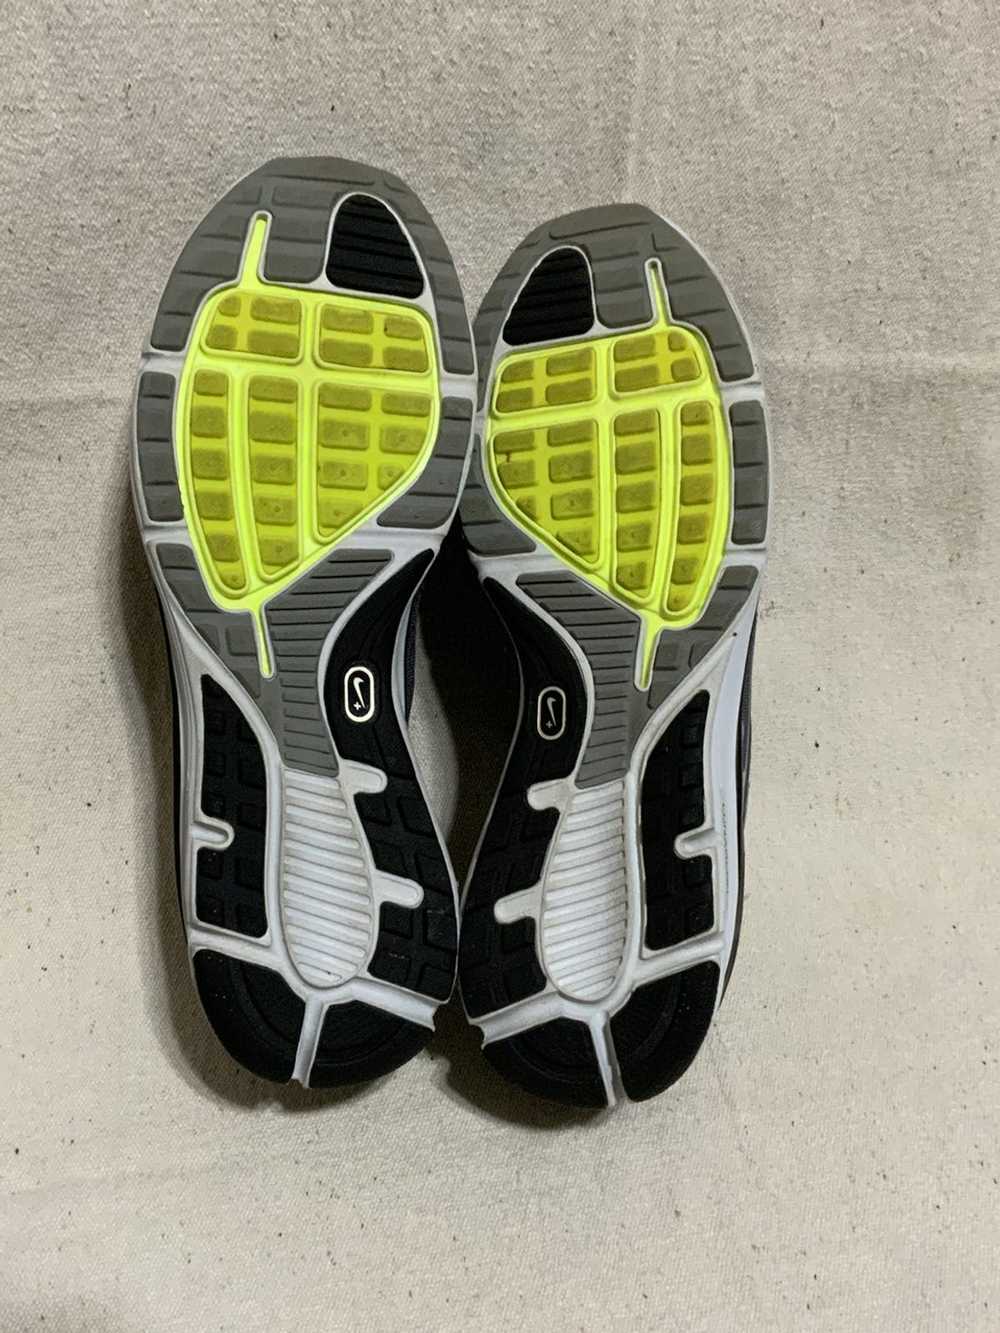 Nike Lunar Eclipse 3 running shoes - image 4